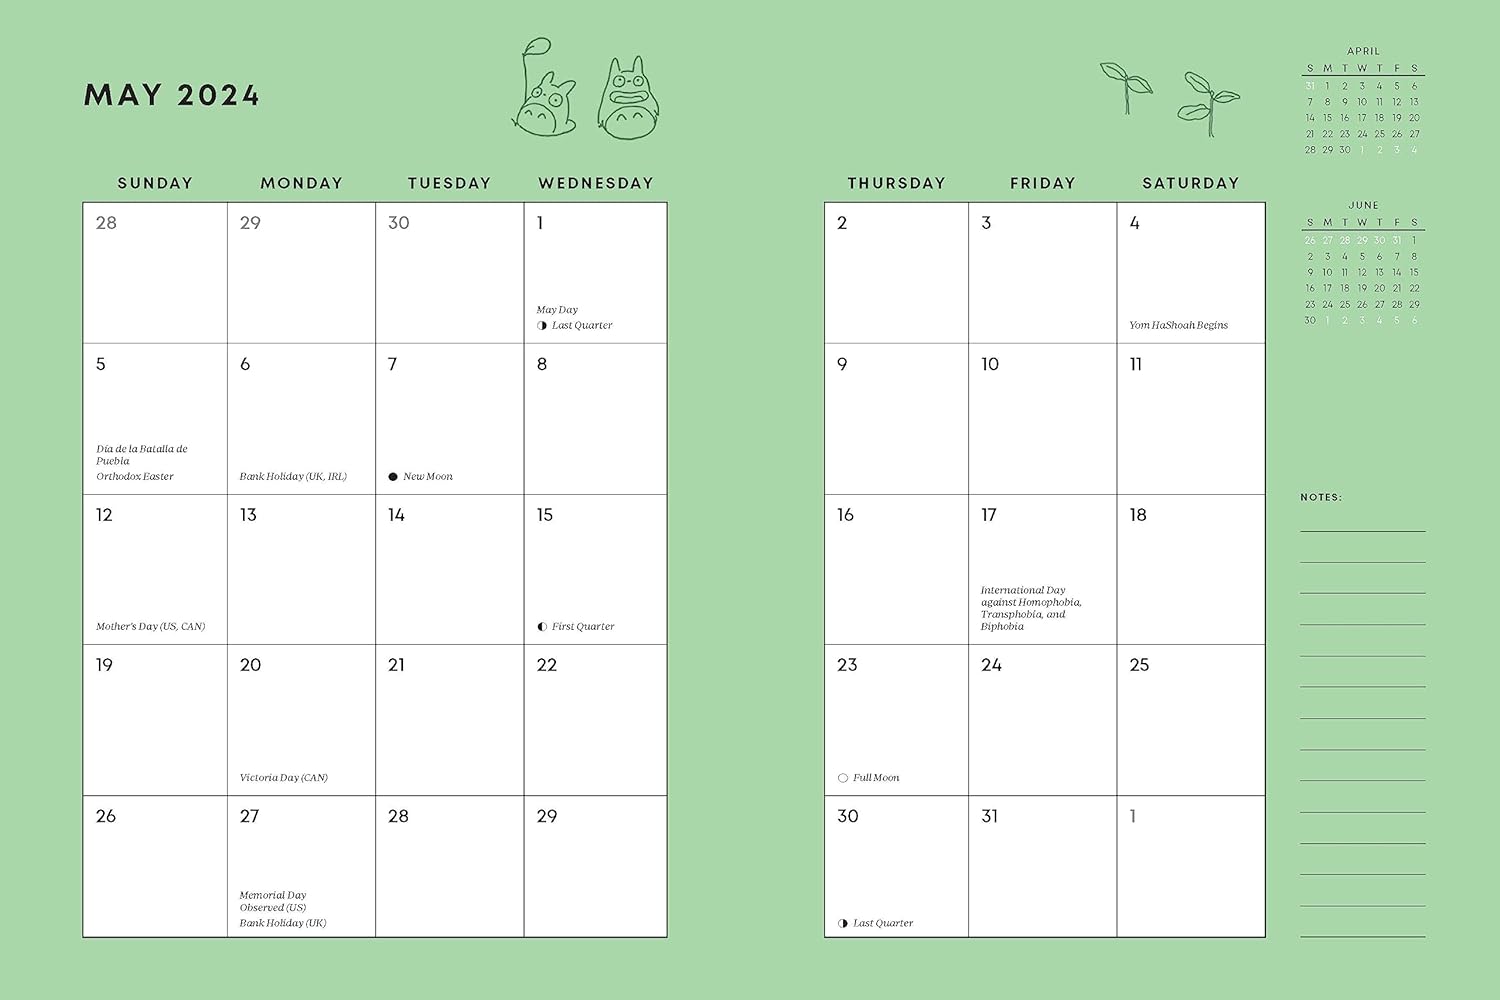 2025 My Neighbor Totoro Engagement Calendar